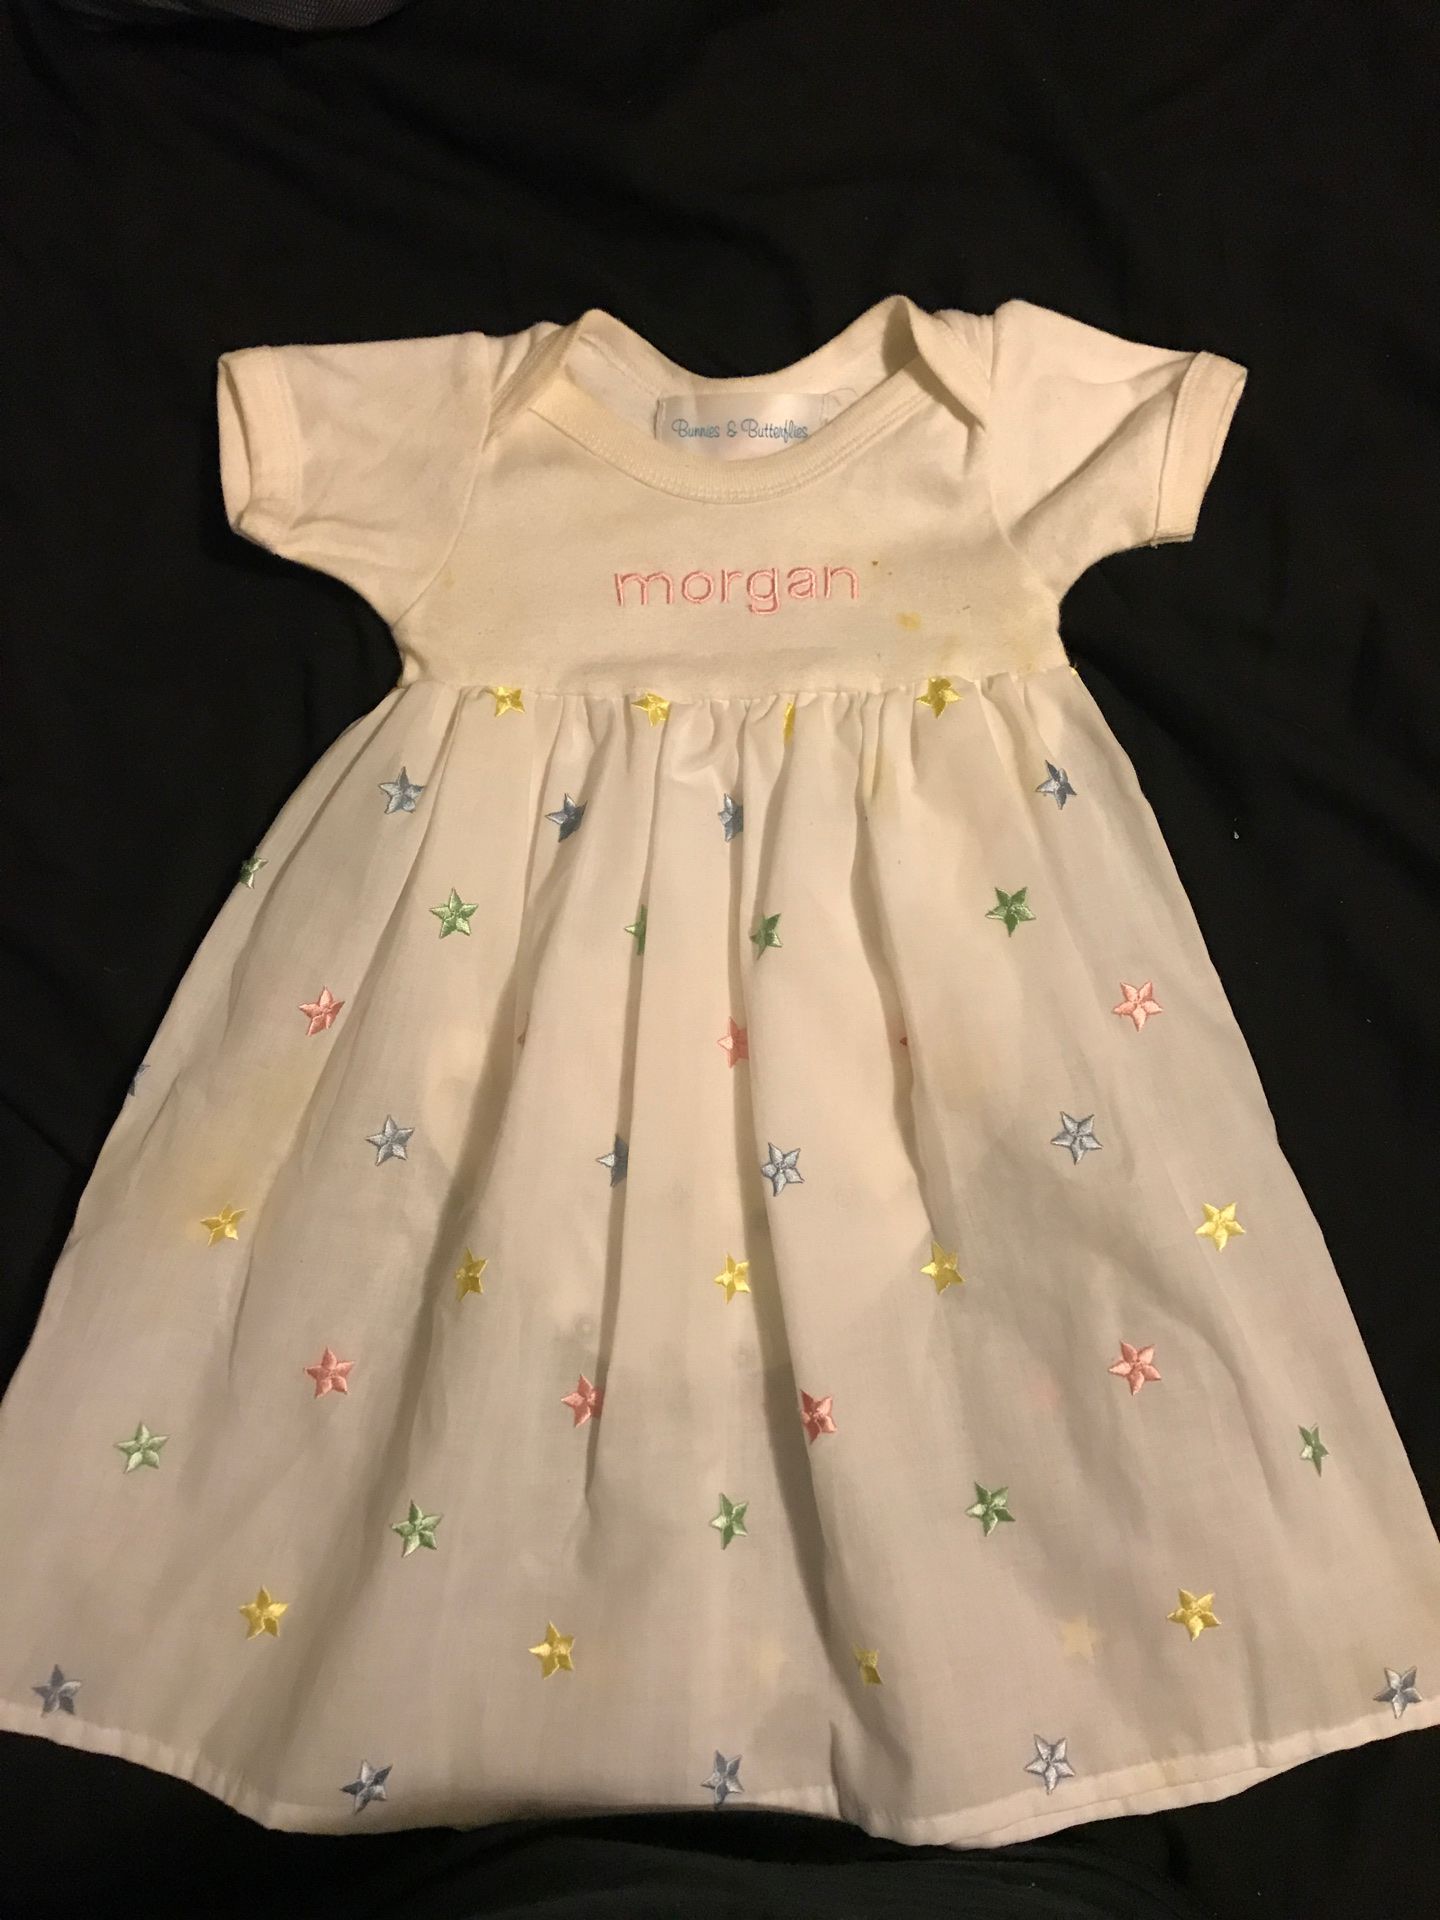 Baby name “Morgan” Dress